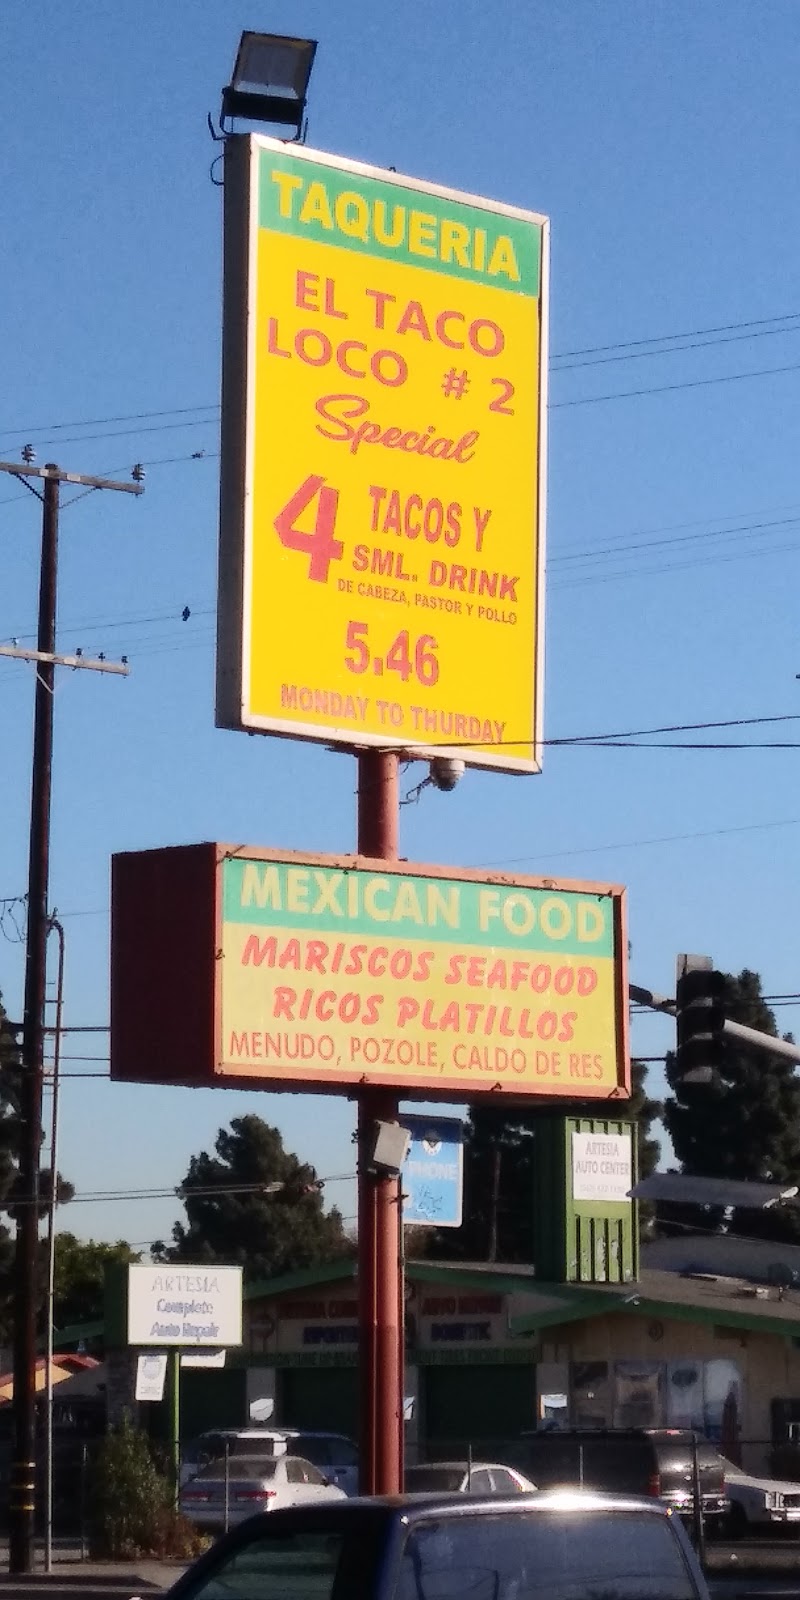 El Taco Loco # 2 | 1541 E Artesia Blvd, Long Beach, CA 90805 | Phone: (562) 422-1152